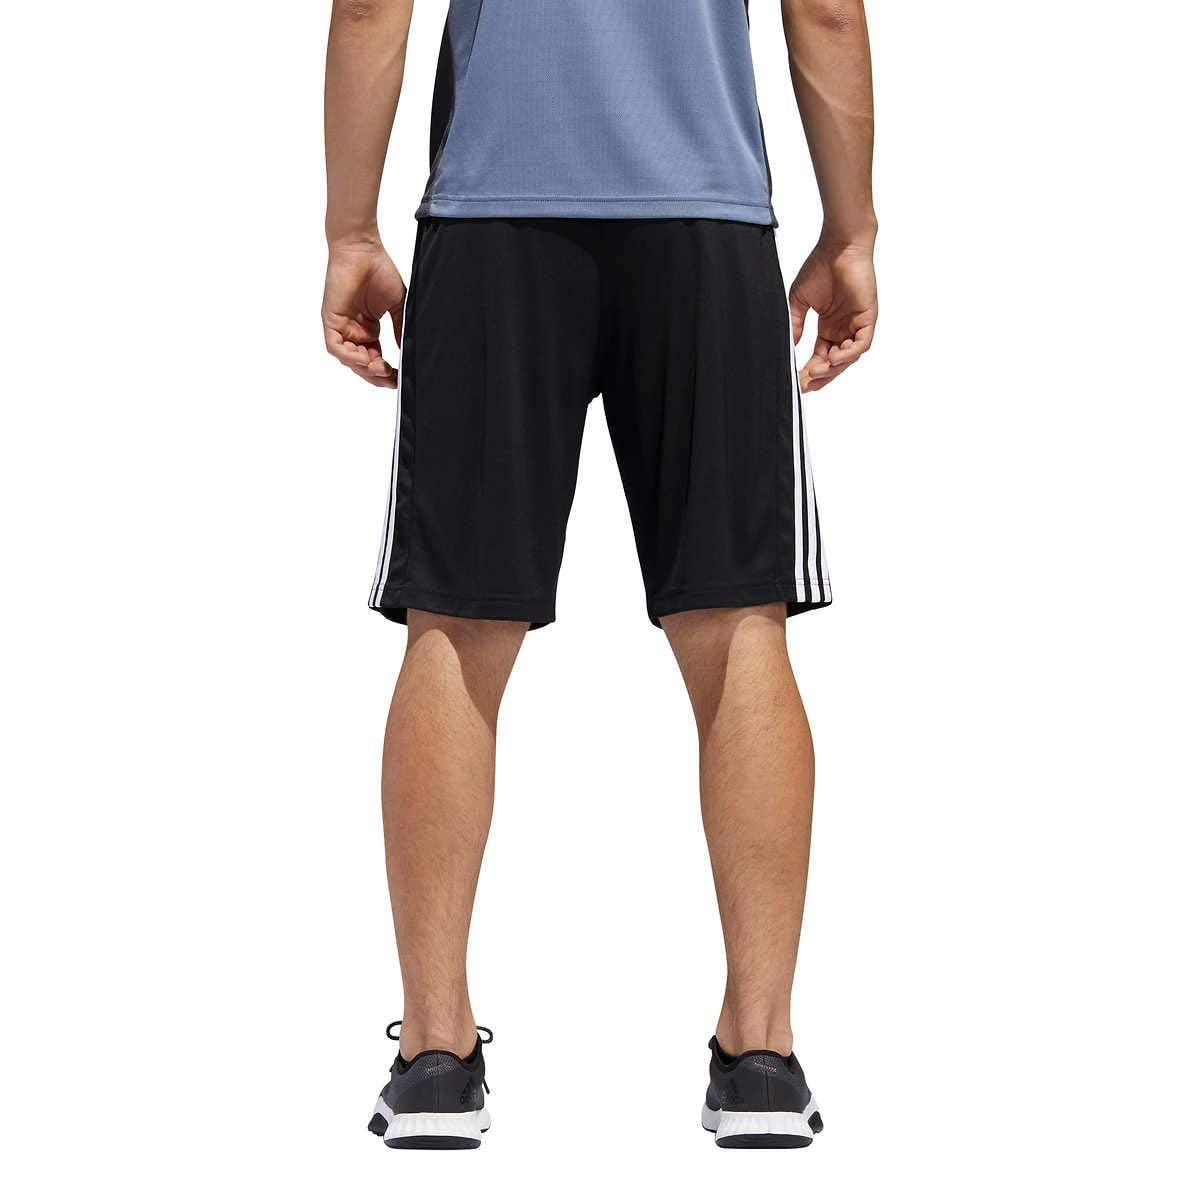 adidas shorts with back pocket